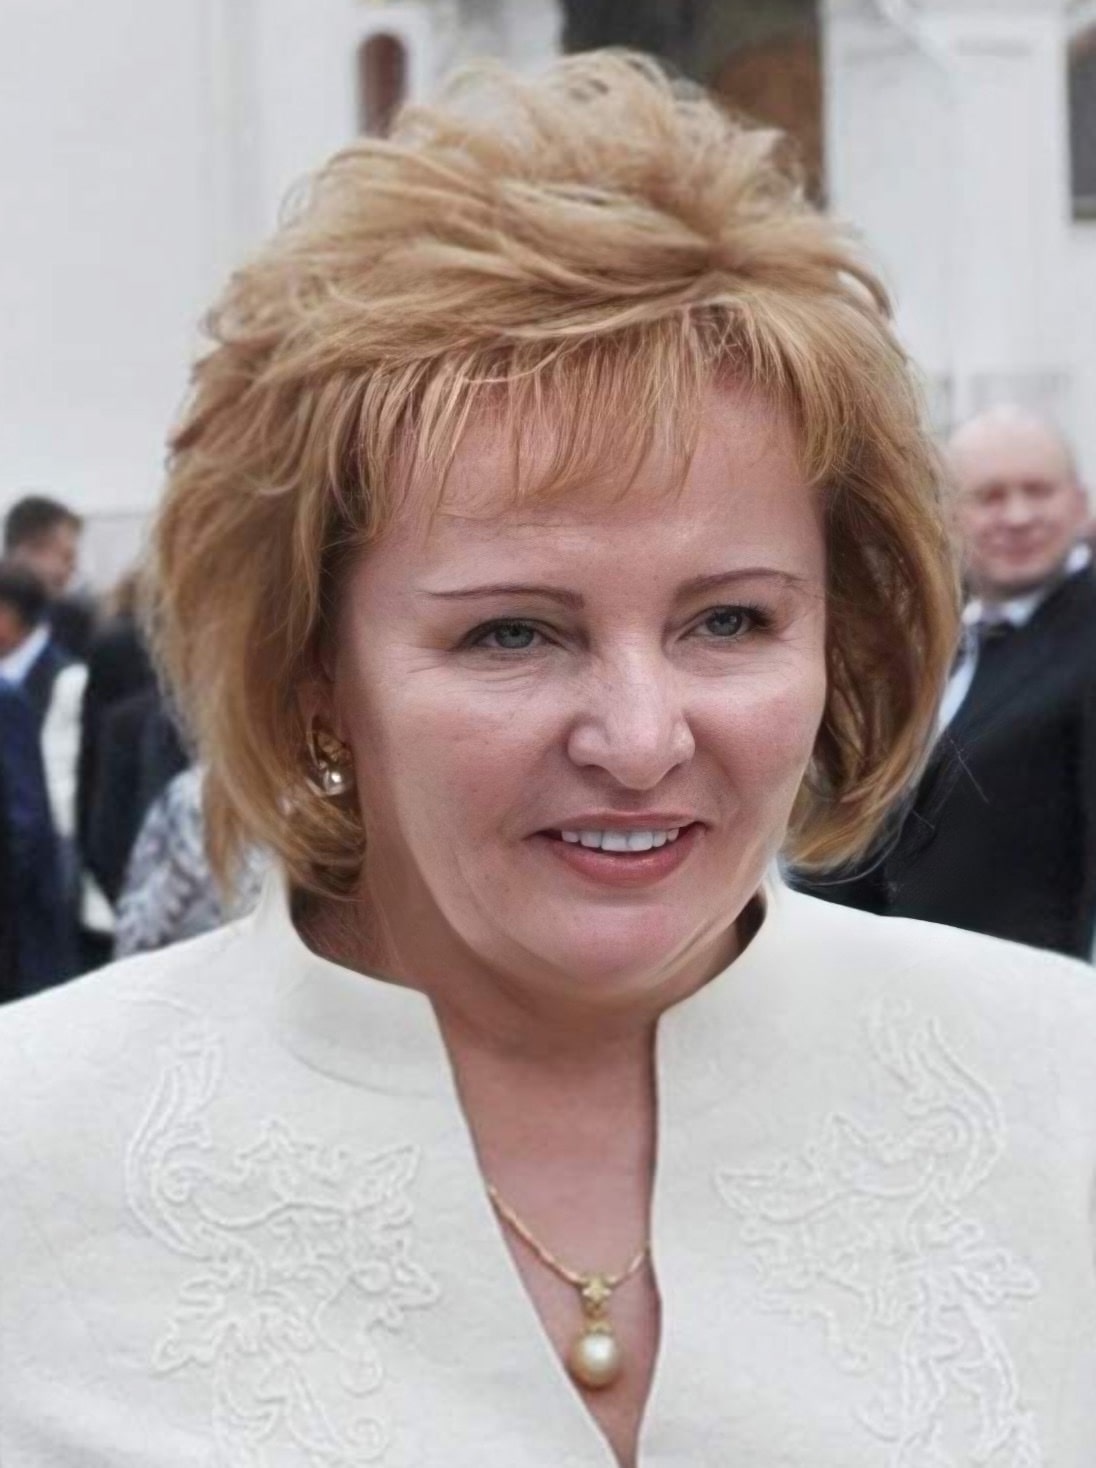 Katerina Vladimirovna Tikhonova's mother Lyudmila Putina